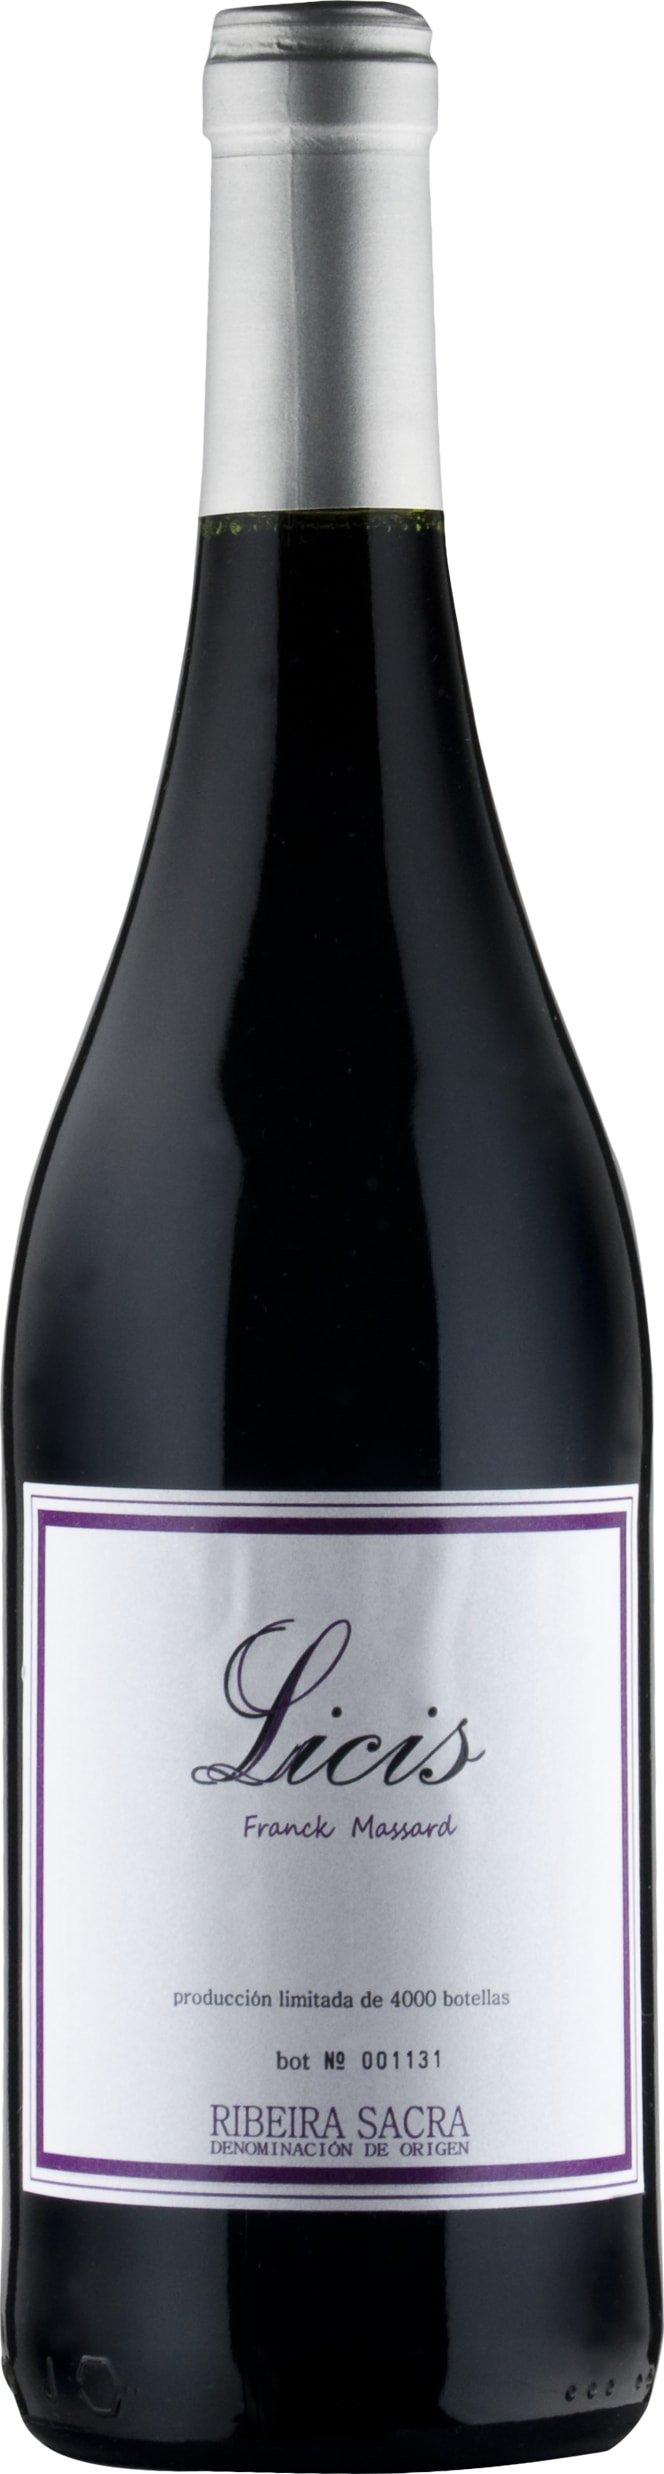 Franck Massard Licis Mencia 2015 75cl - Buy Franck Massard Wines from GREAT WINES DIRECT wine shop